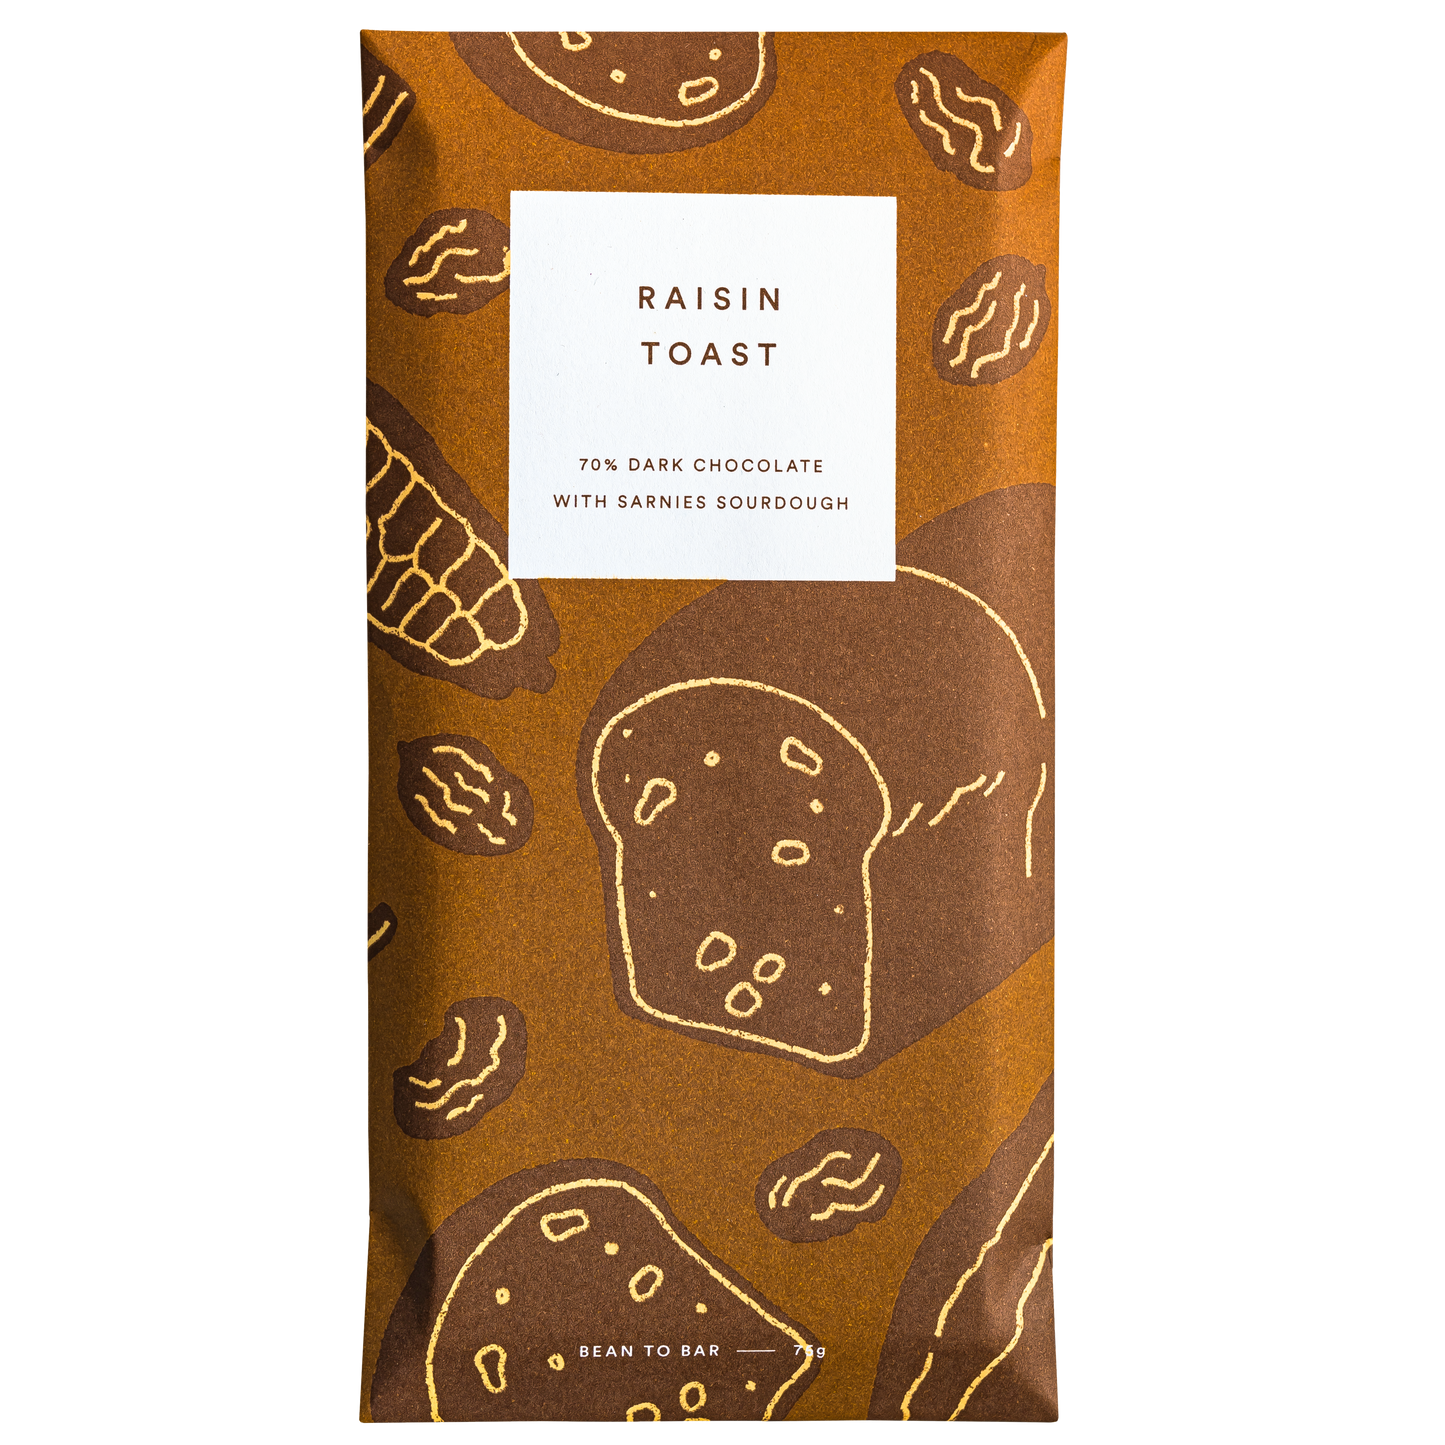 Sarnies x Siamaya Raisin Toast Chocolate (VG)